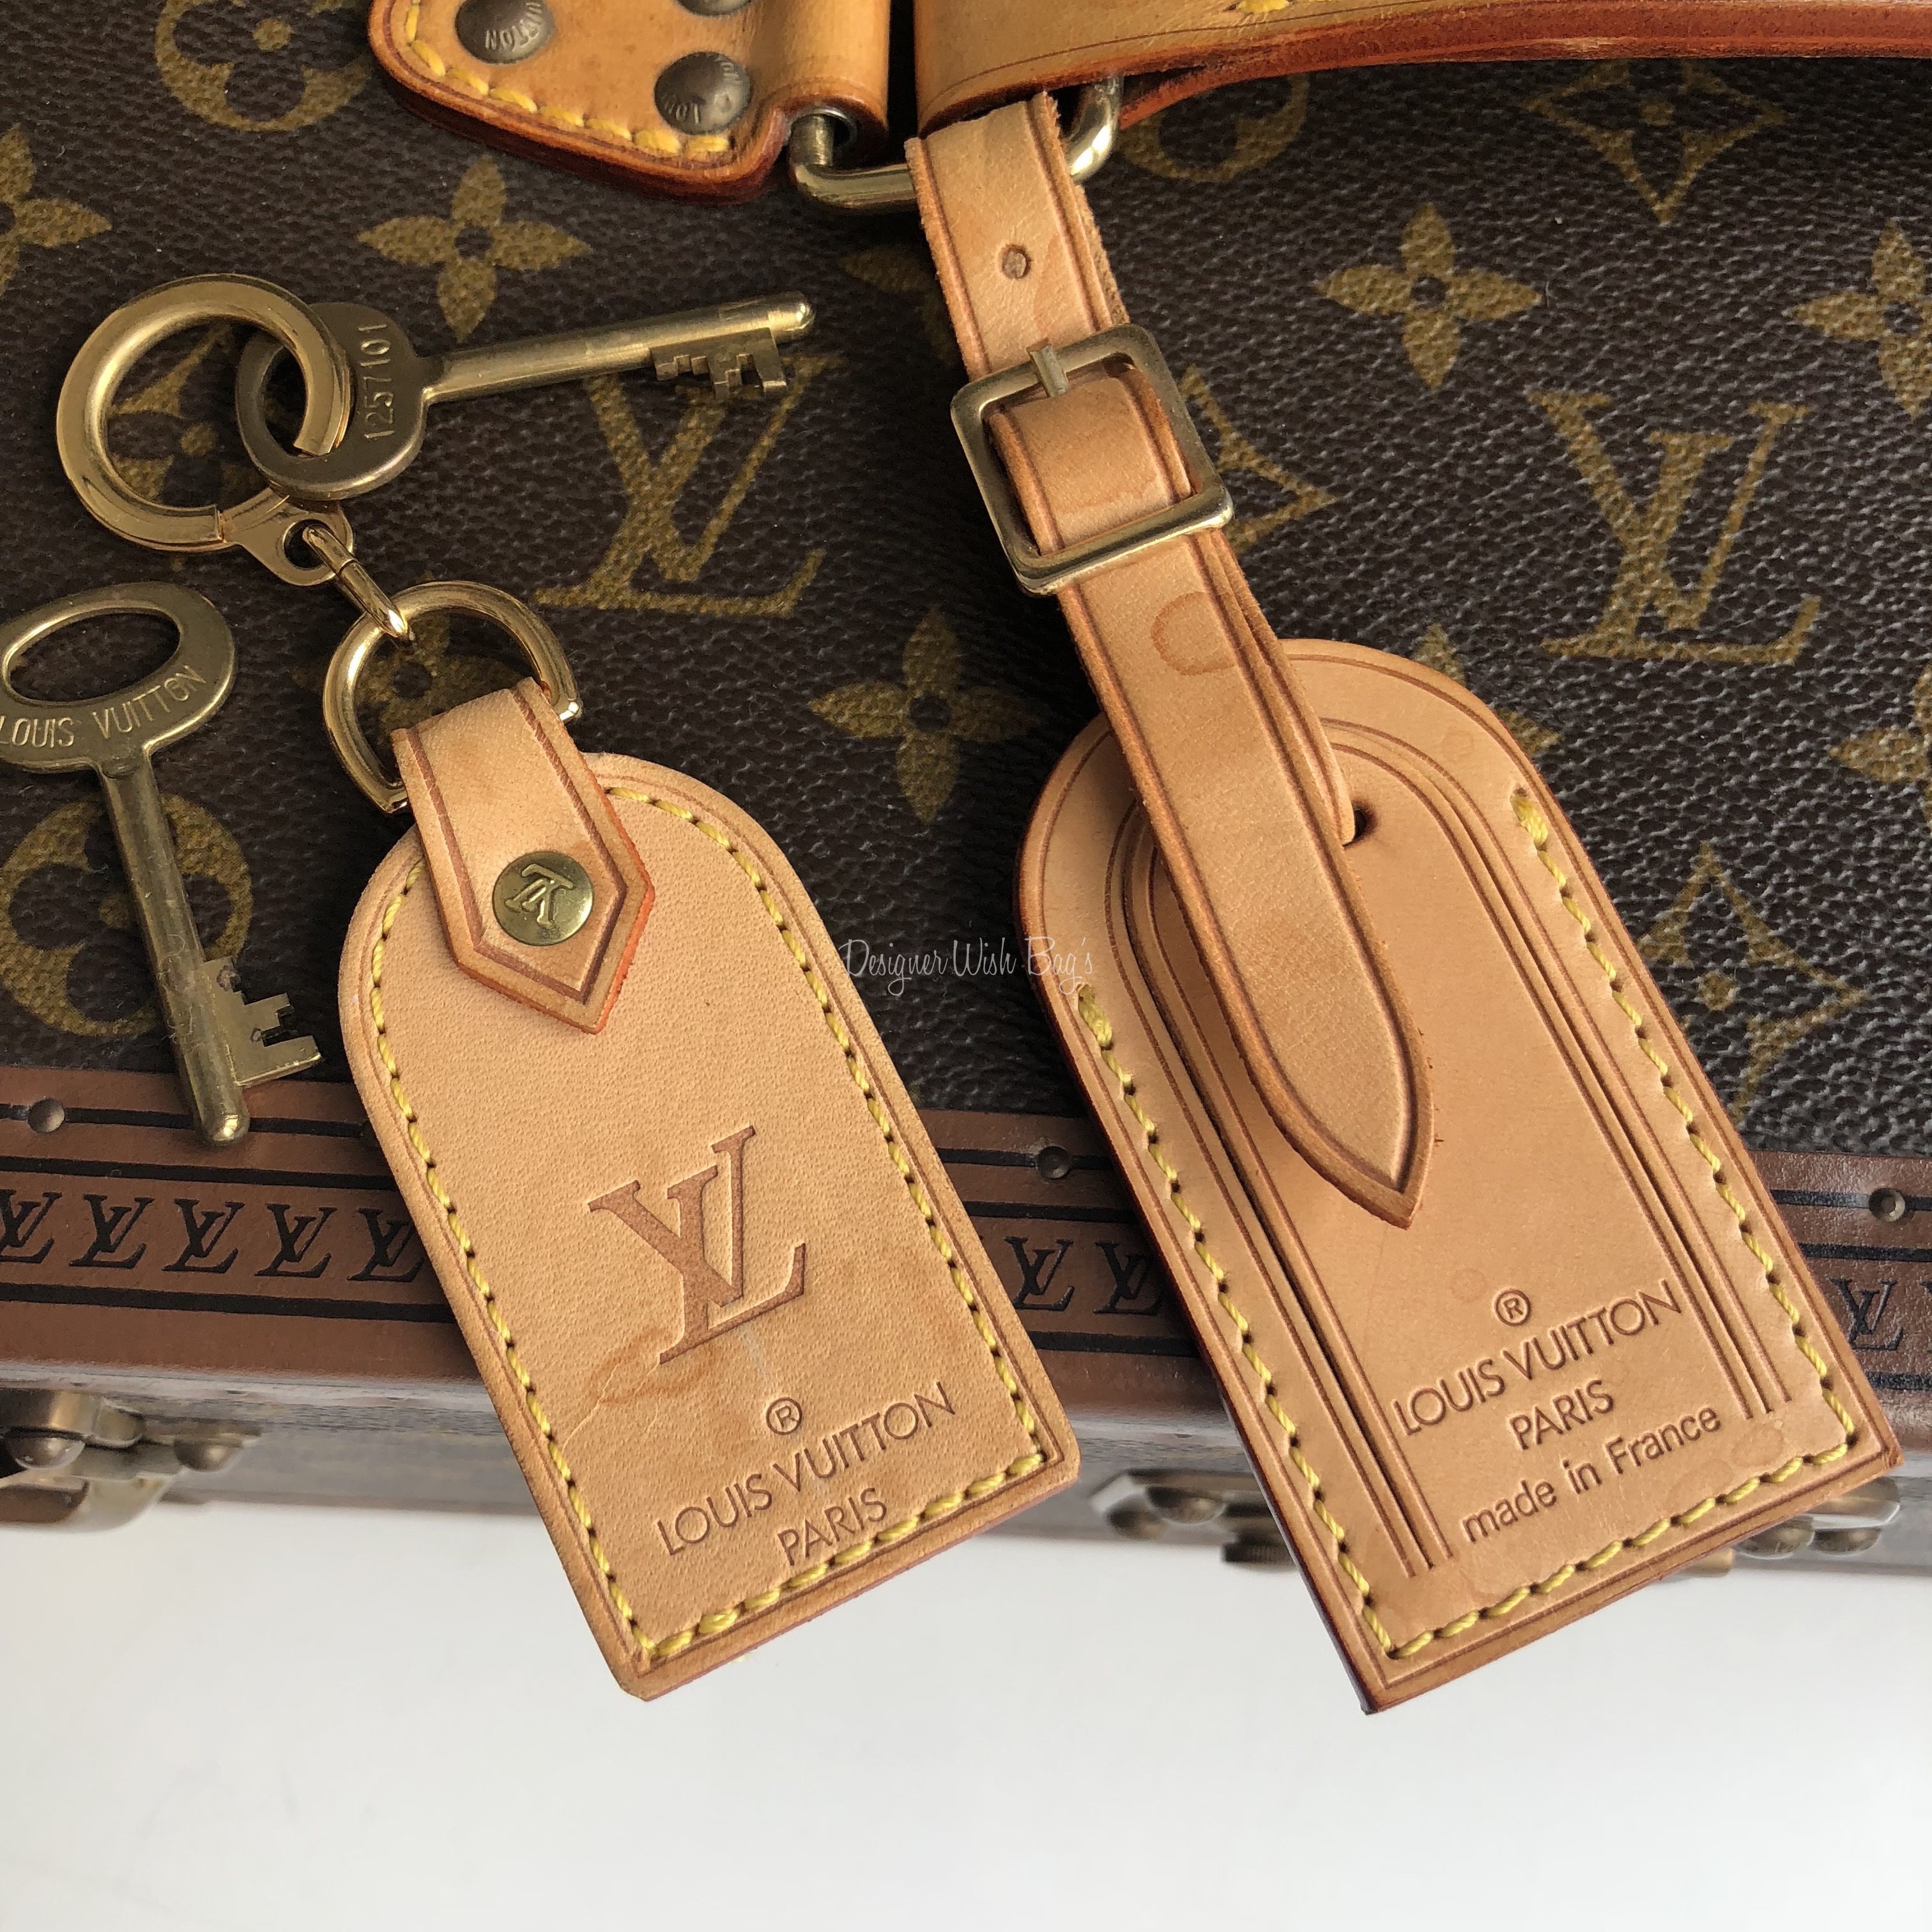 Louis Vuitton Trunk Cosmetic - Designer WishBags